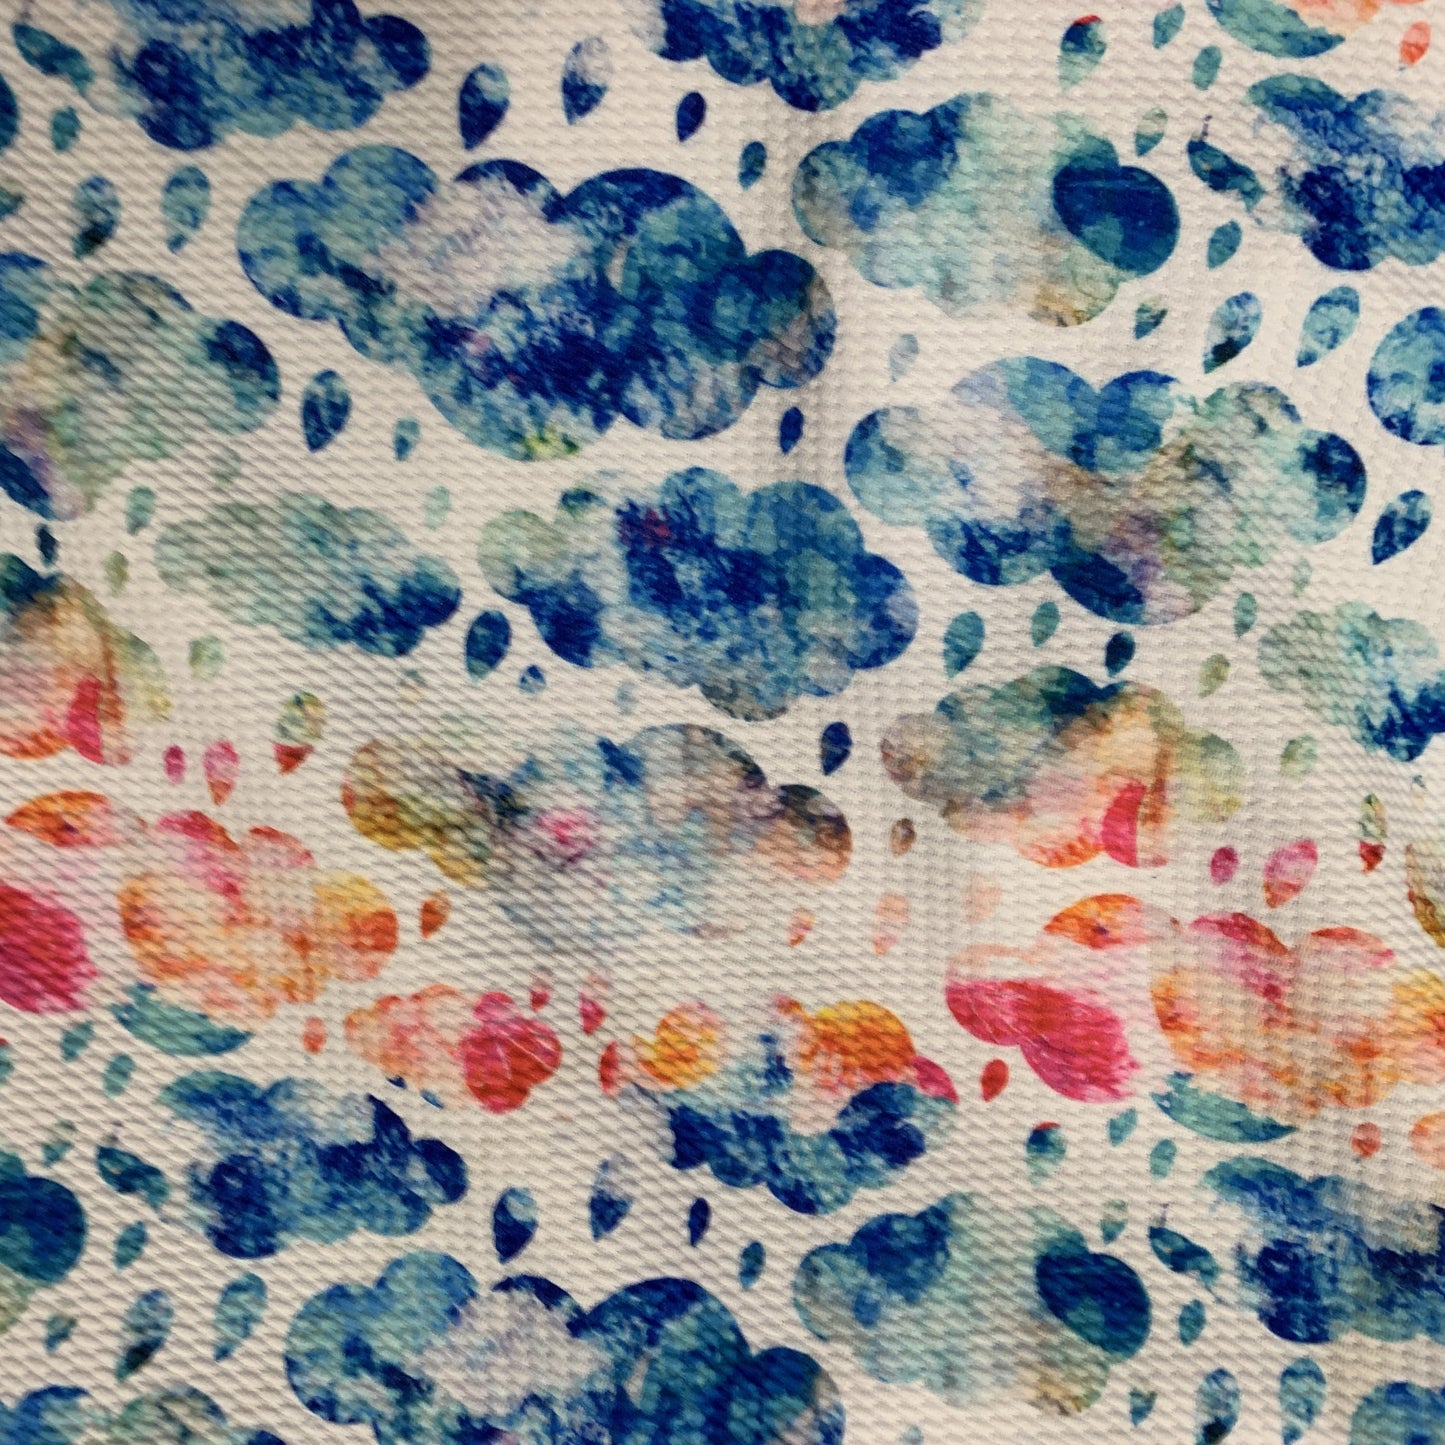 Rainy Days on Bullet Knit - Nature's Fabrics